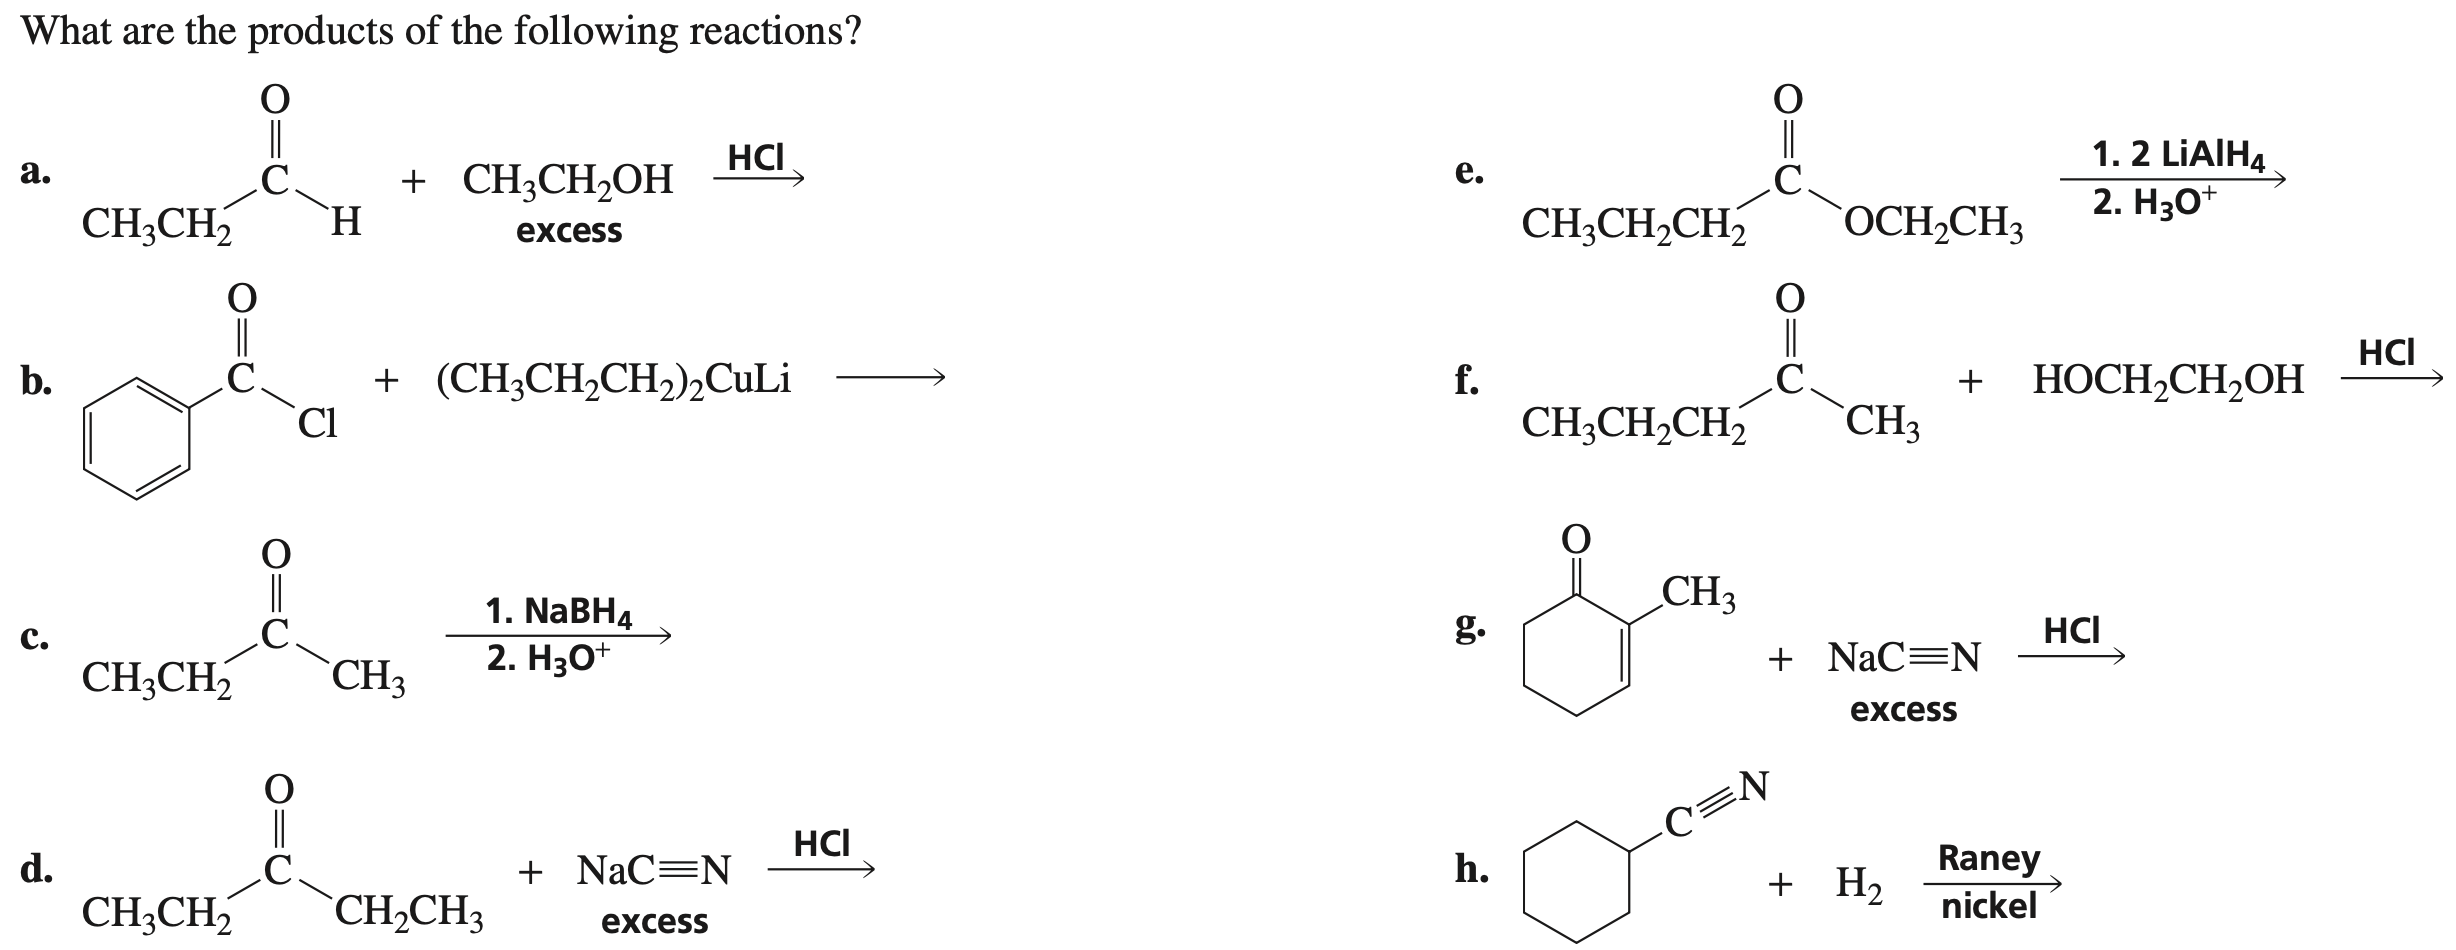 Ch3oh ch3oh продукт реакции. Бензальдегид nabh4. Карбоновая кислота lialh4. Альдегид nabh4 ch3oh. Метилфенилкетон nabh4 h2o.